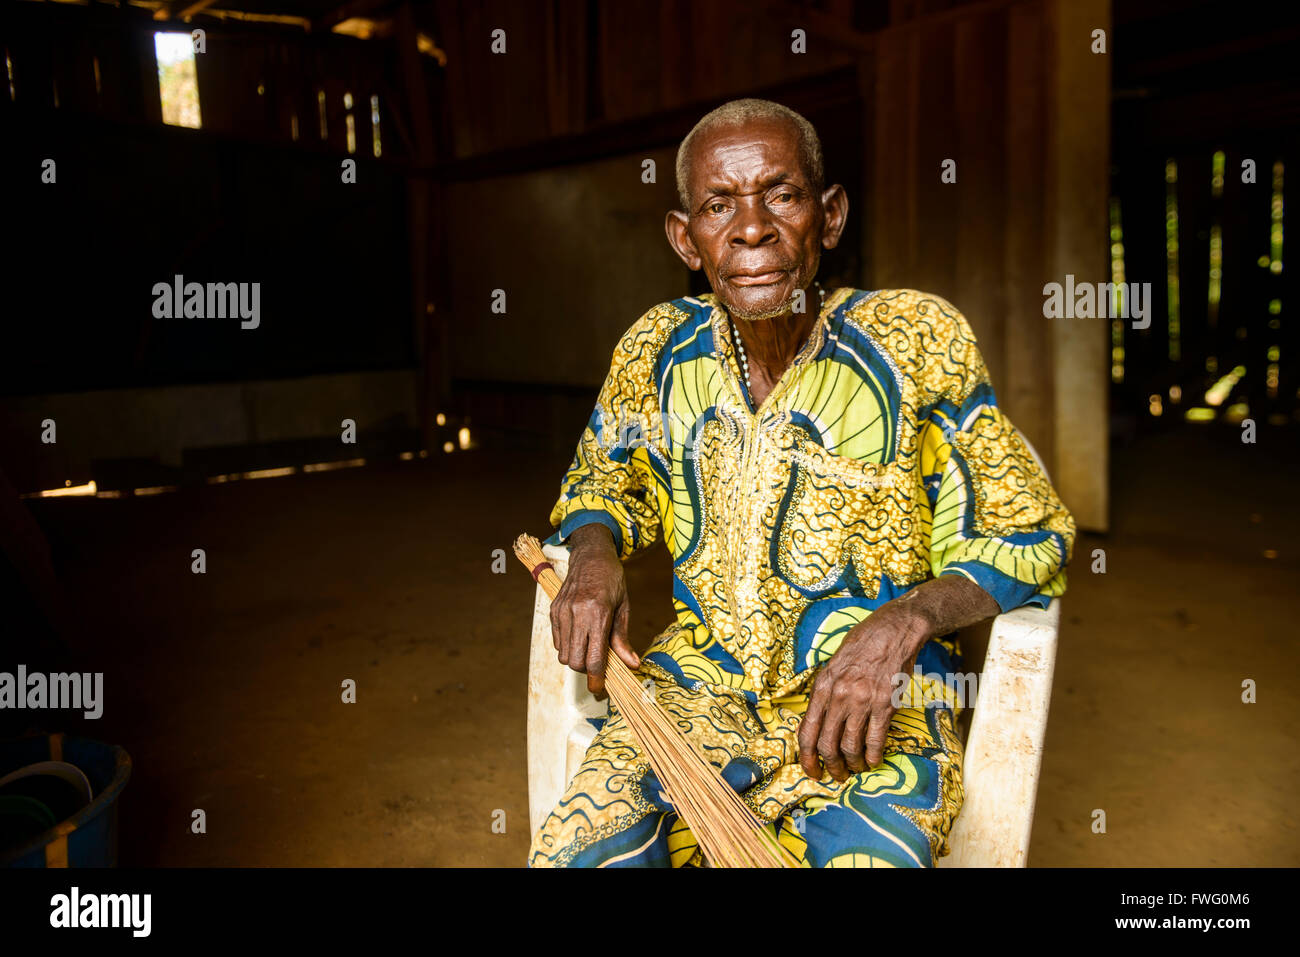 Older man, Gabon, Central Africa Stock Photo